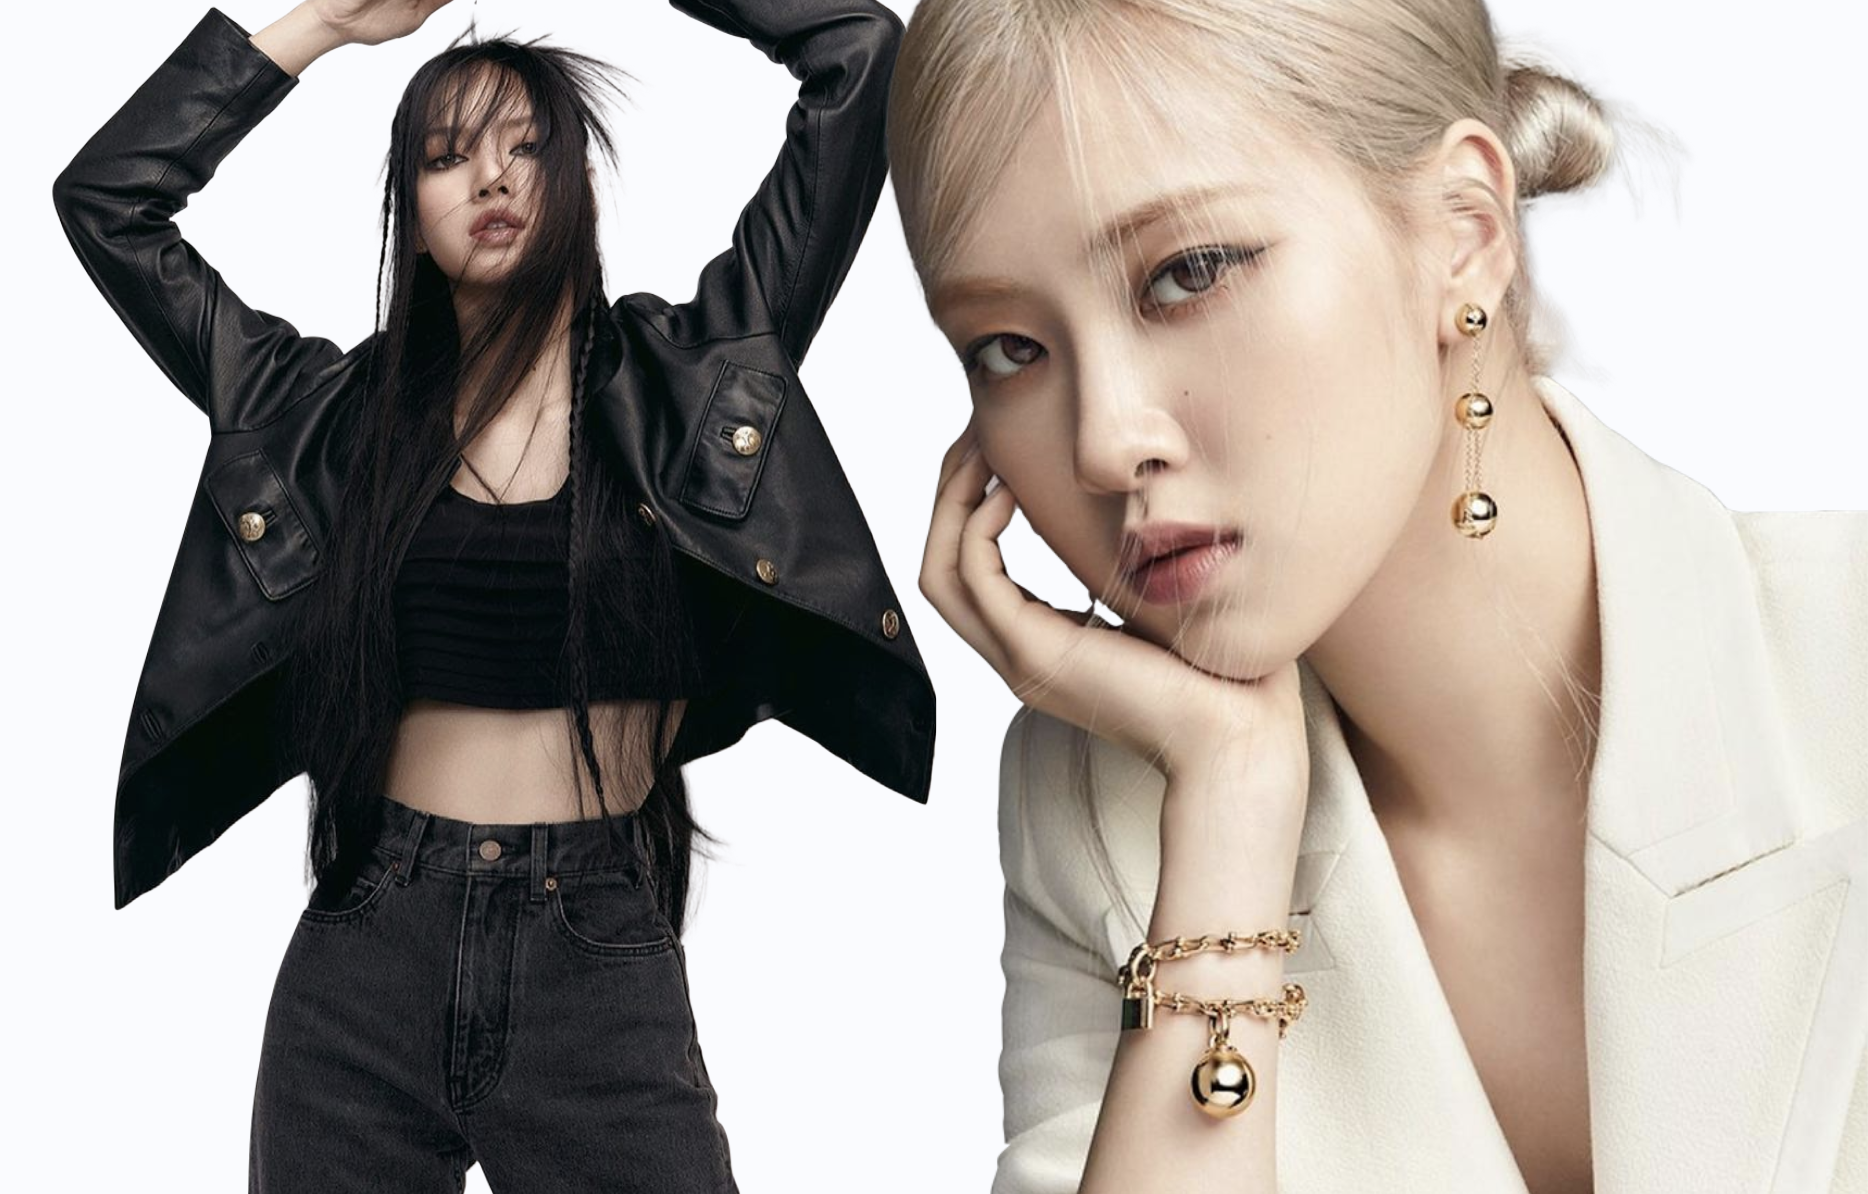 BLACKPINK Continues To Dominate The Fashion Scene: Rosé Named Tiffany & Co.  Global Ambassador, Lisa On The Cover Of Vogue Japan - EnVi Media